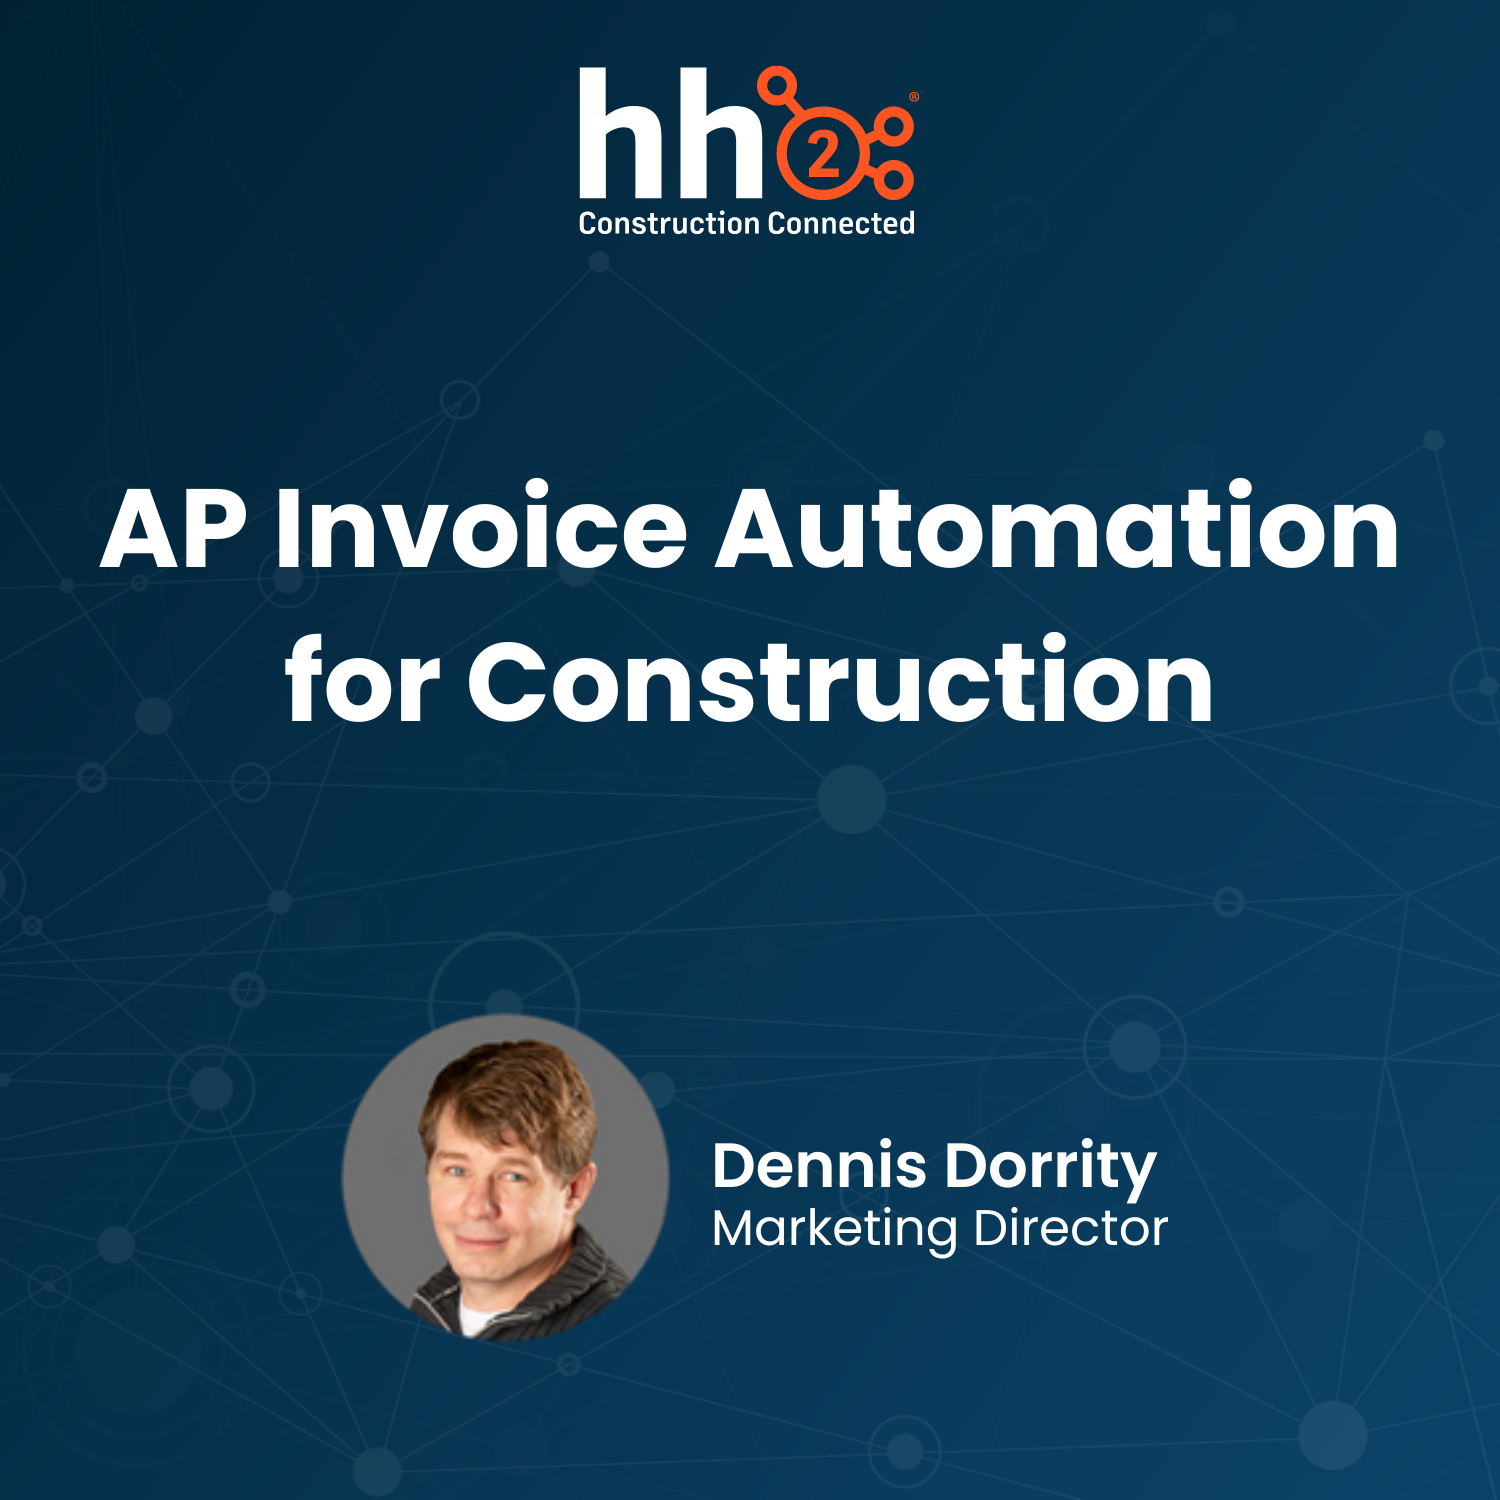 AP Invoice Automation for Construction Webinar